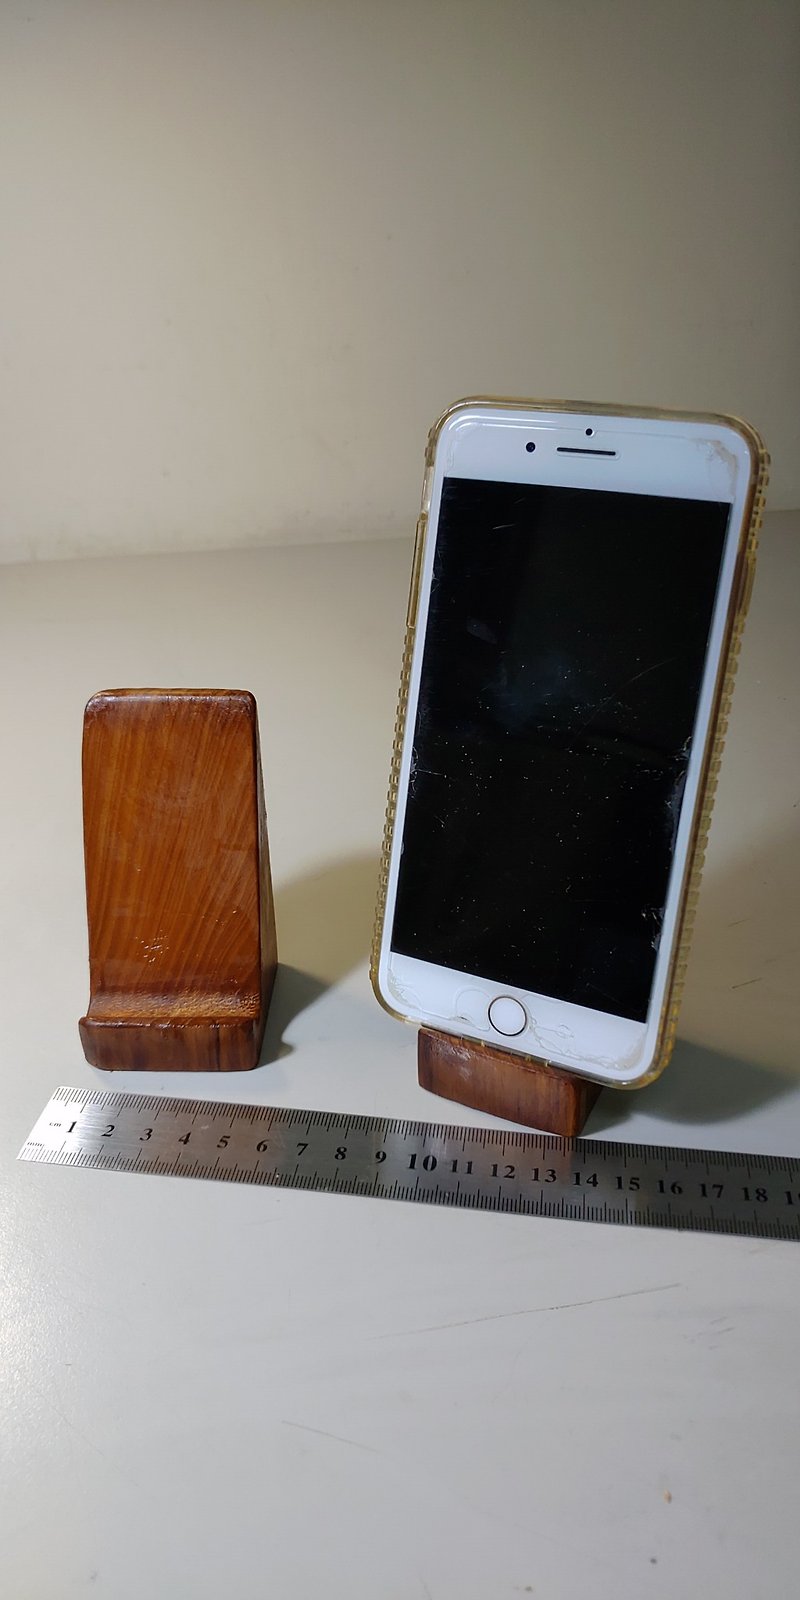 Taiwan log Xiao Nan wood mobile phone holder vertical (Sao Nan) - ที่ตั้งมือถือ - ไม้ 